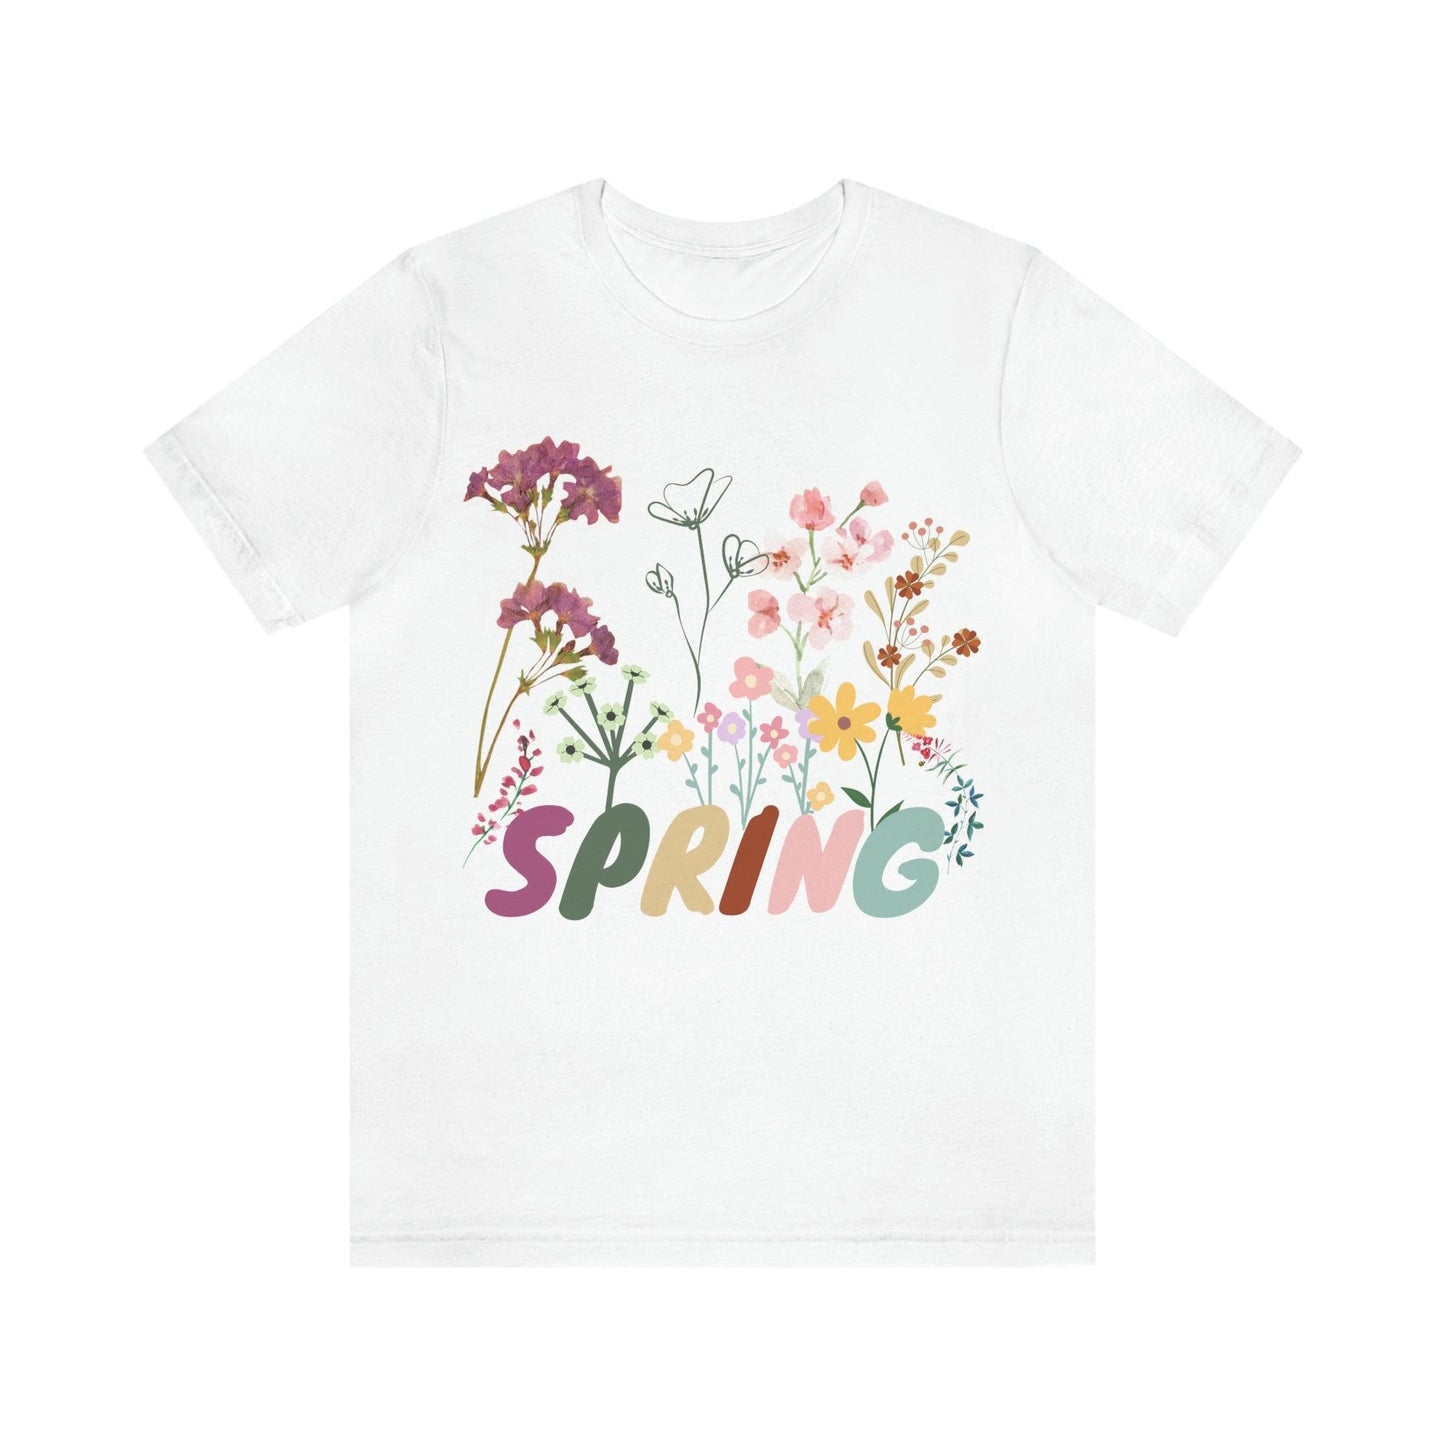 Spring Shirt, Flower T shirt, Vintage Botanical Shirt, Vintage T-shirt, Graphic Tshirt, Botanical Print, Vintage Flower Shirt, Wildflower,